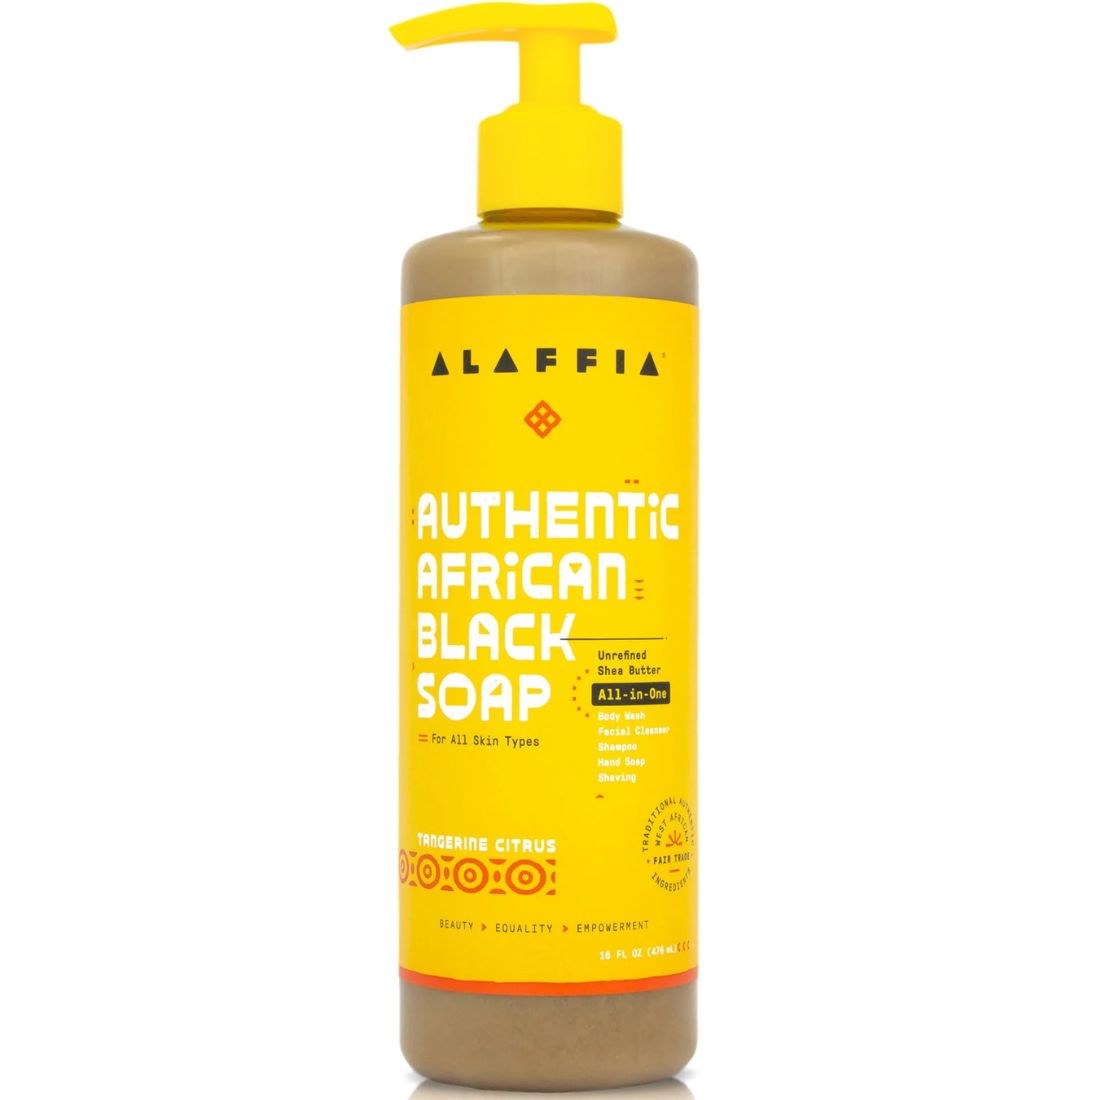 Alaffia Authentic African Black Soap